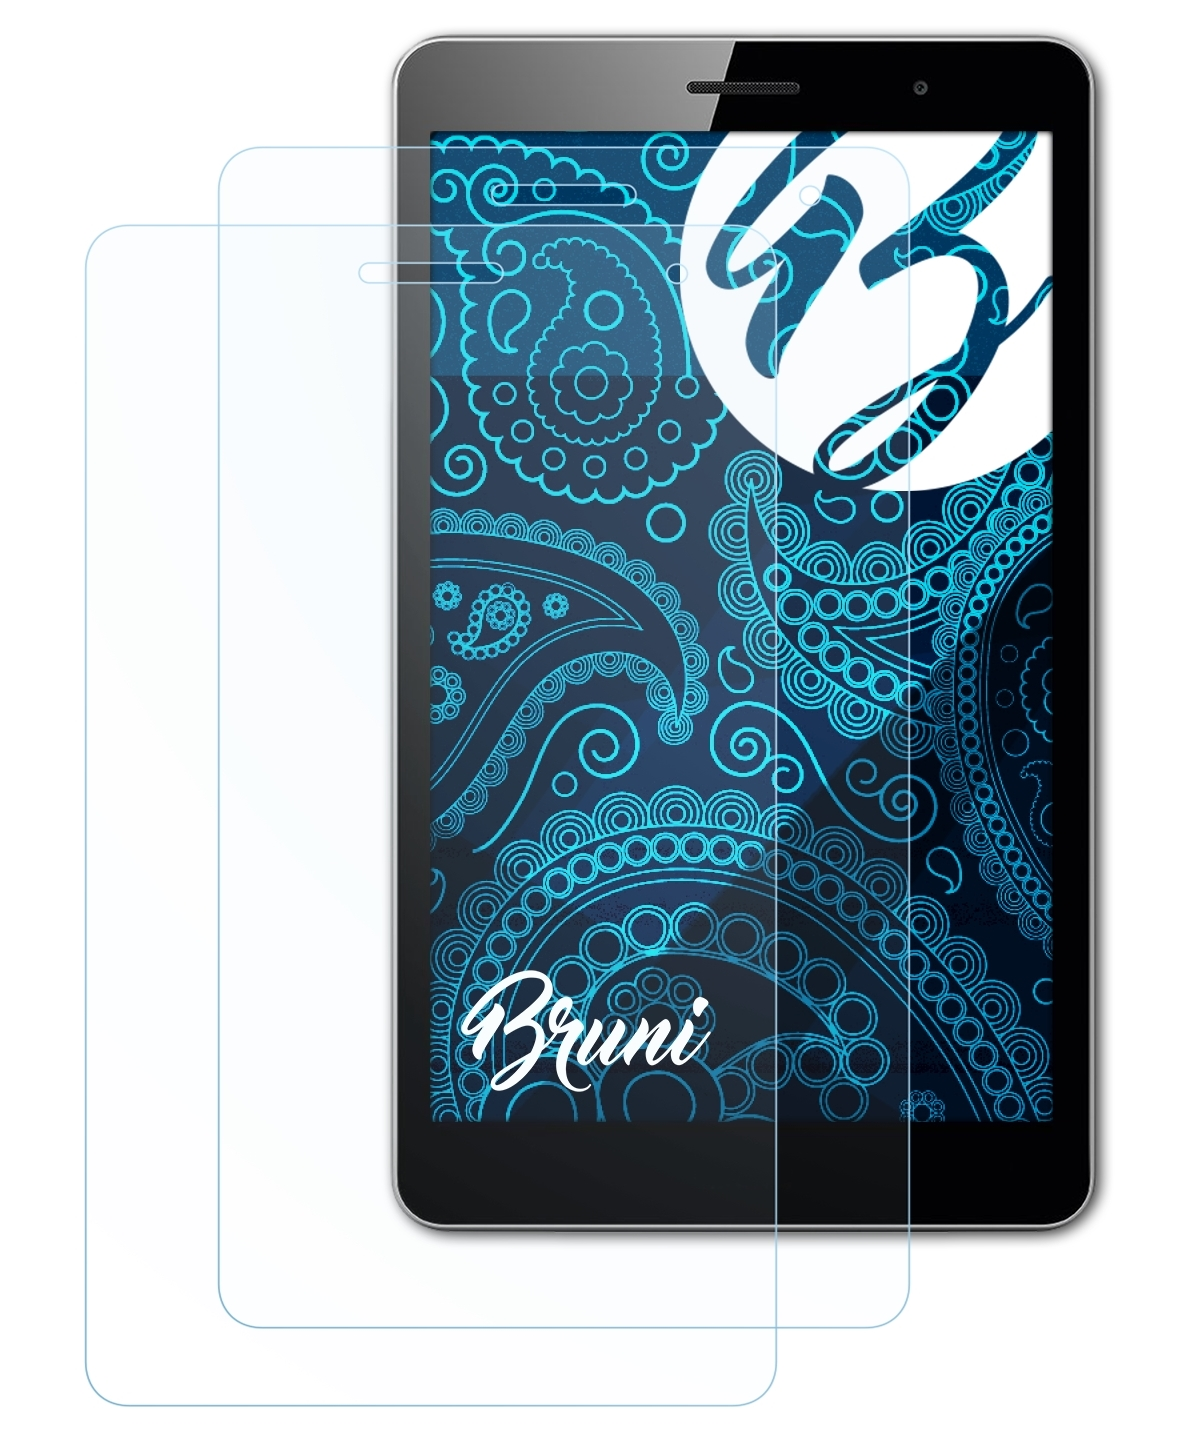 BRUNI 2x Basics-Clear MediaPad T3 7.0 3G) Schutzfolie(für Huawei